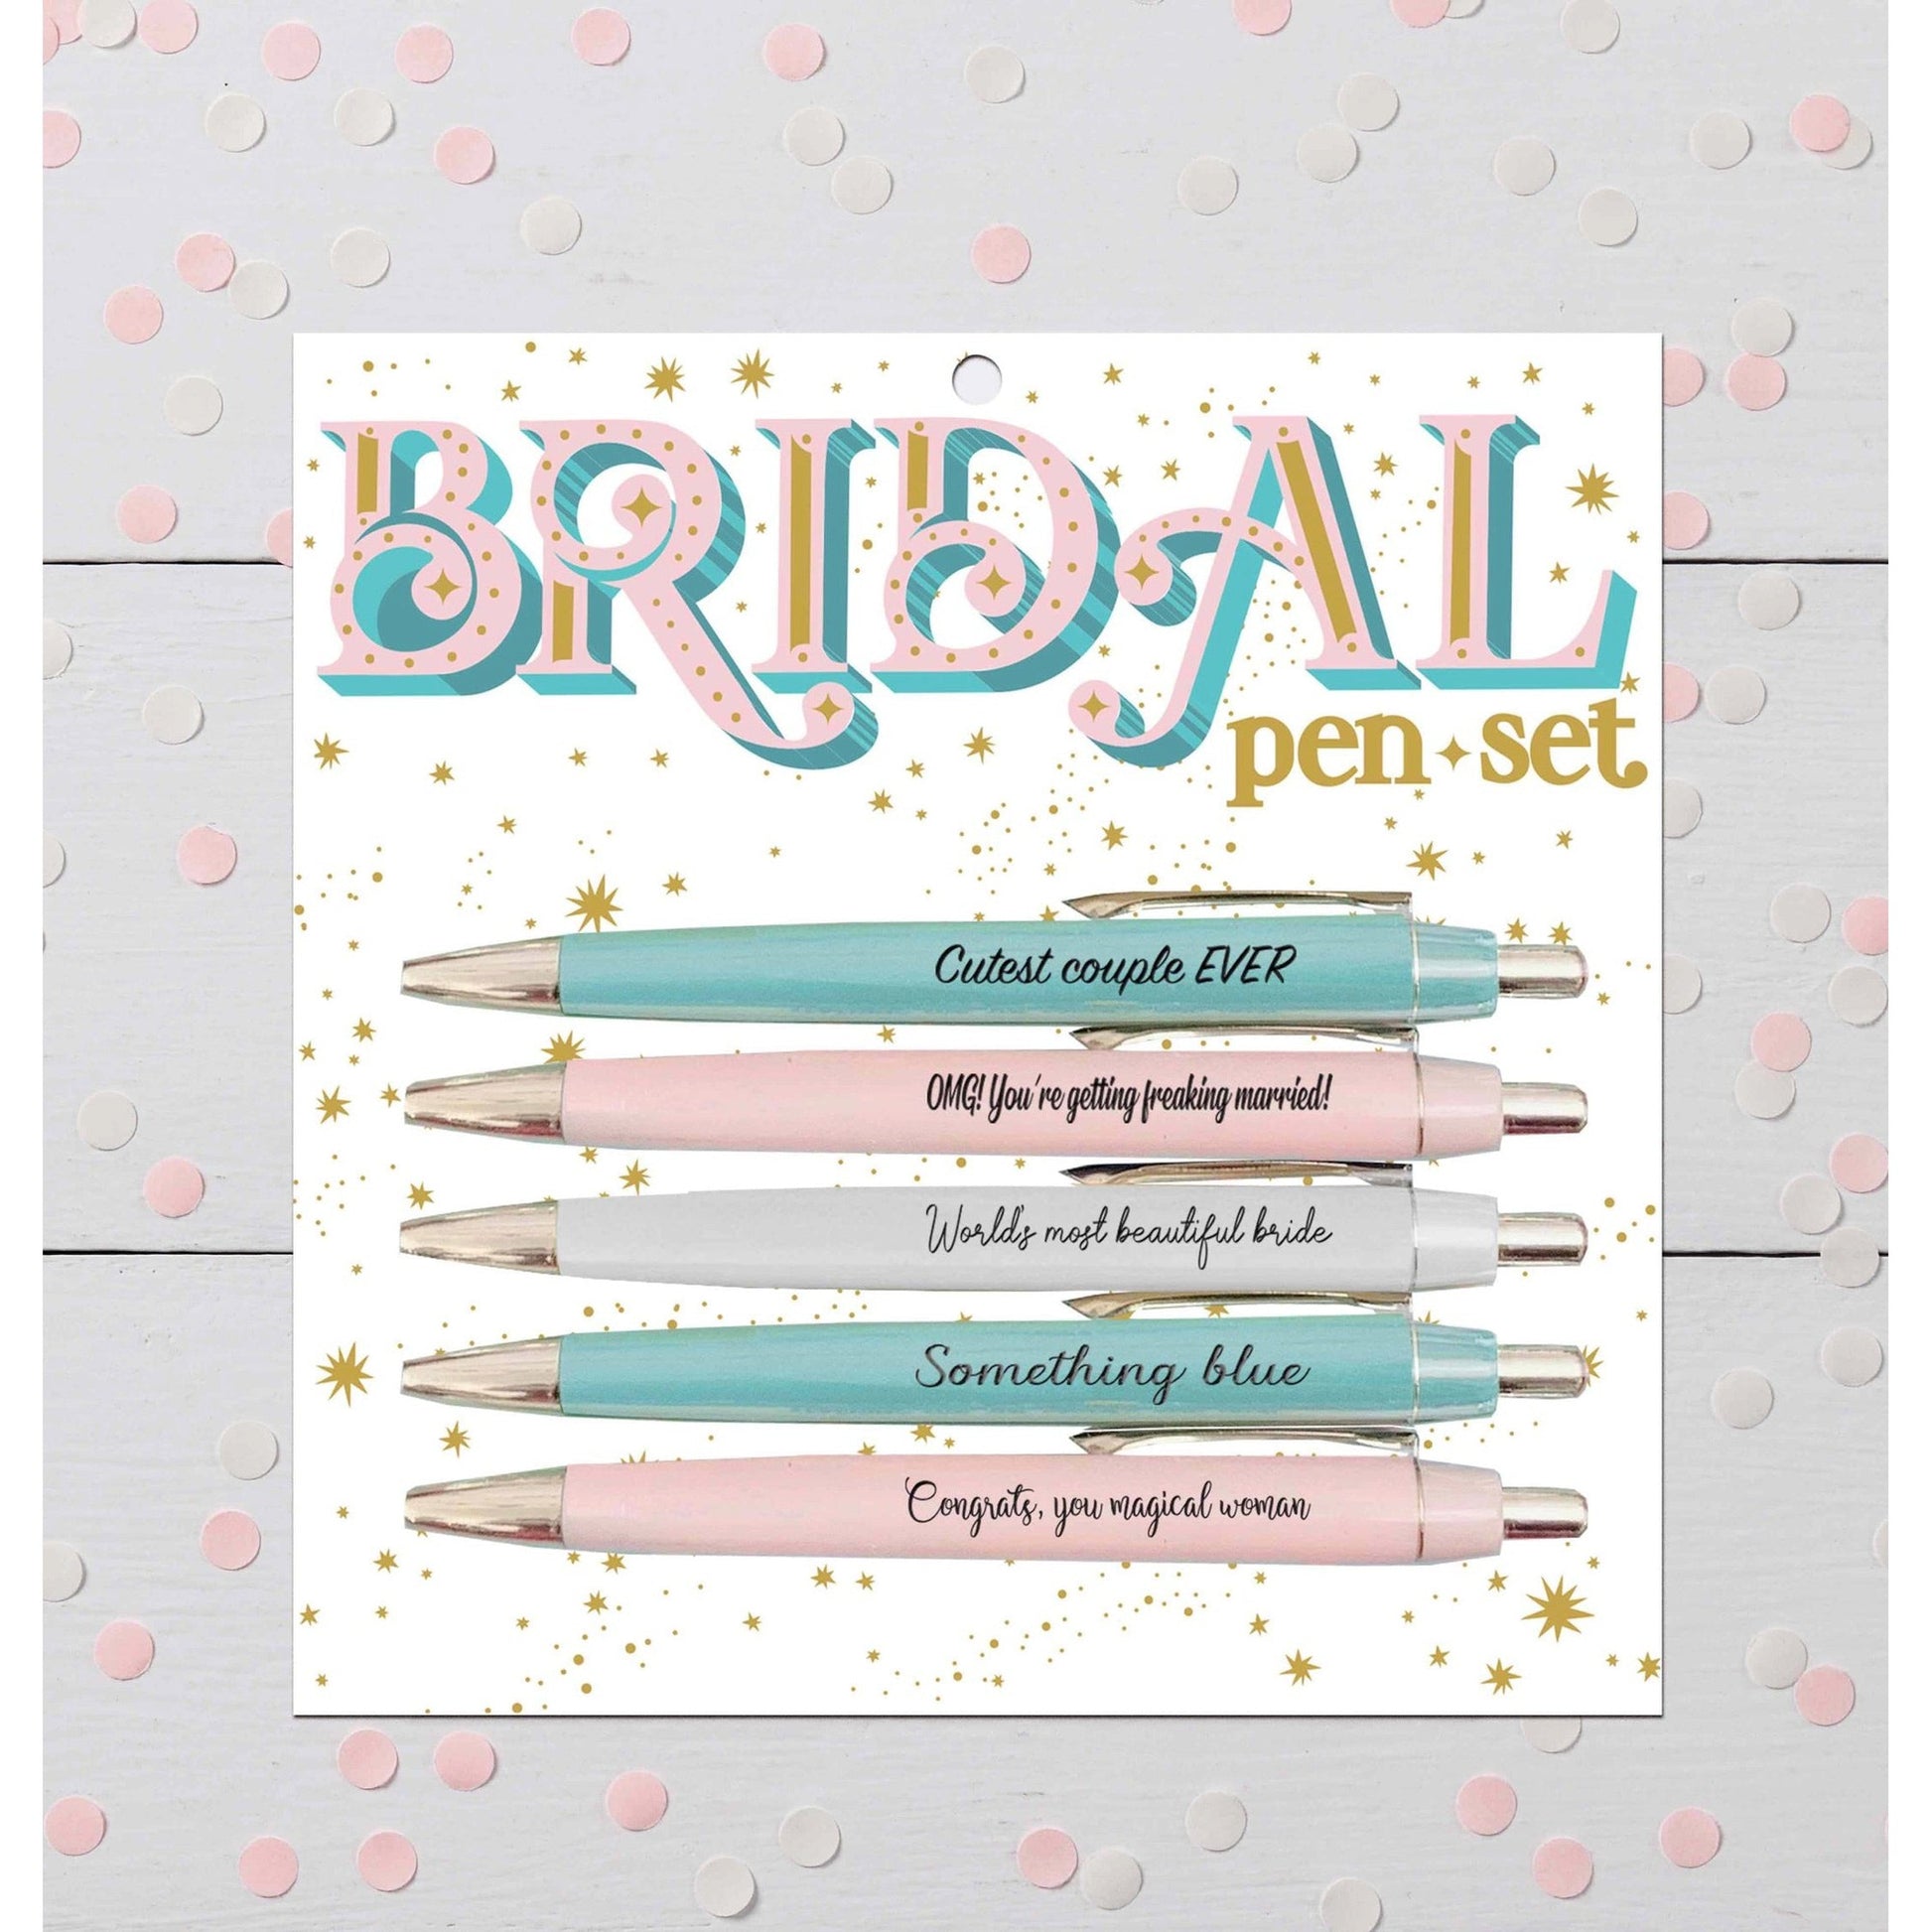 Bridal Ballpoint Pen Set | et of 5 Gift Pens | World's Most Beautiful Bride, Something Blue, Etc.